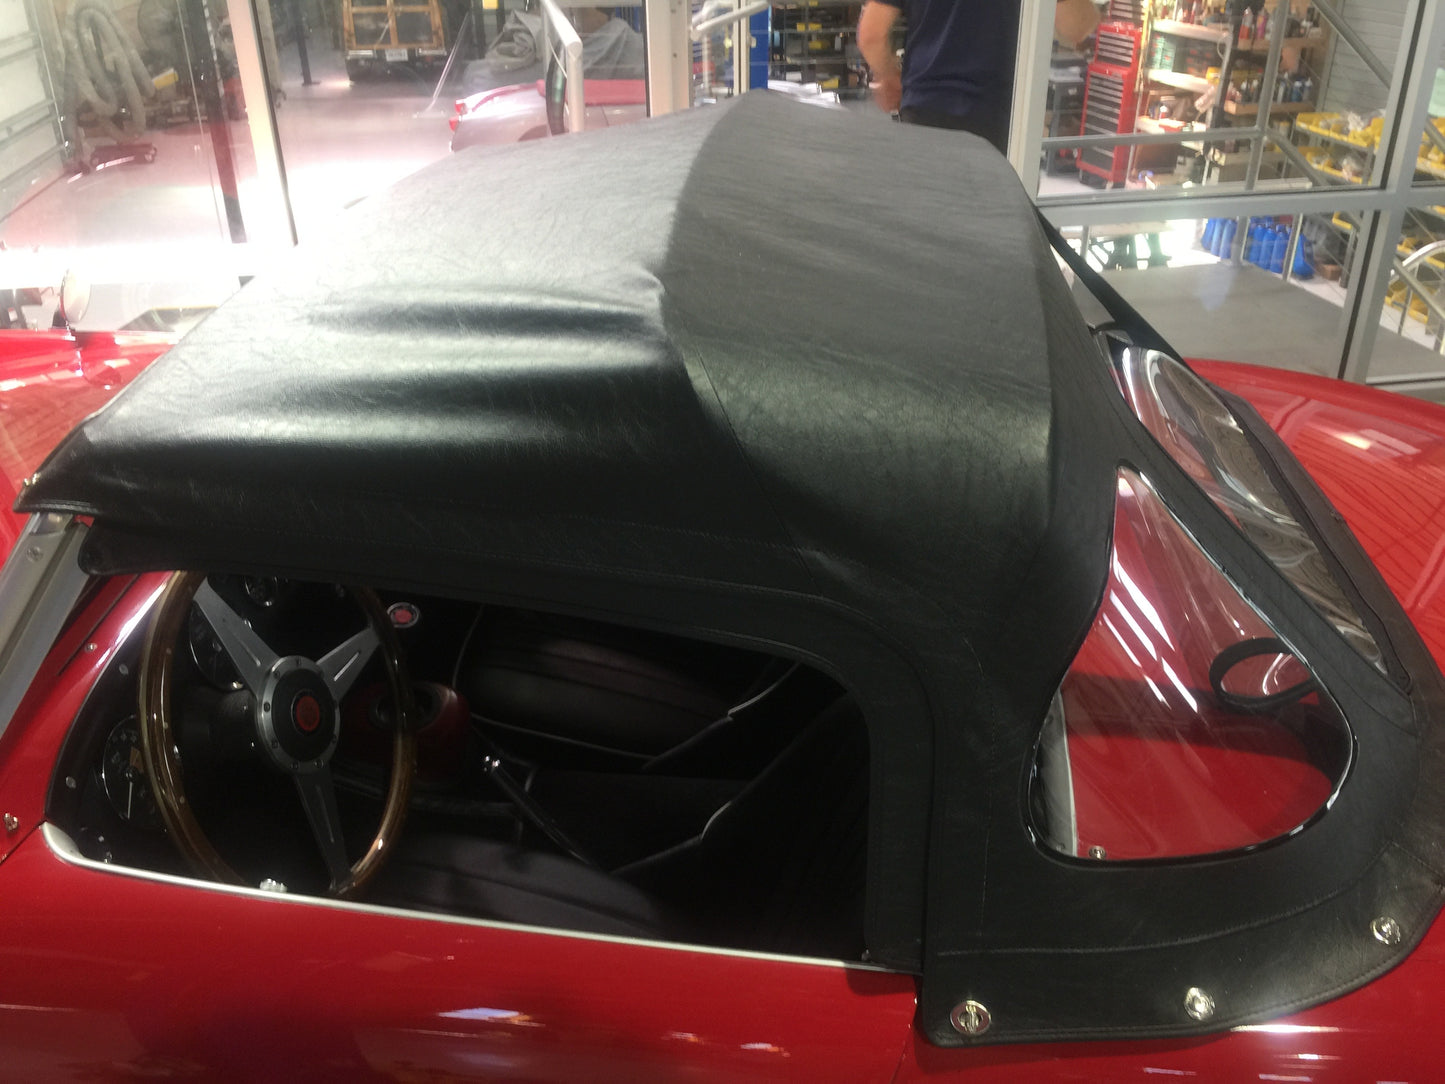 Austin Healey Sprite Bugeye Sprite convertible top with zip-down window. The convertible convertible top! Tops - Bugeye